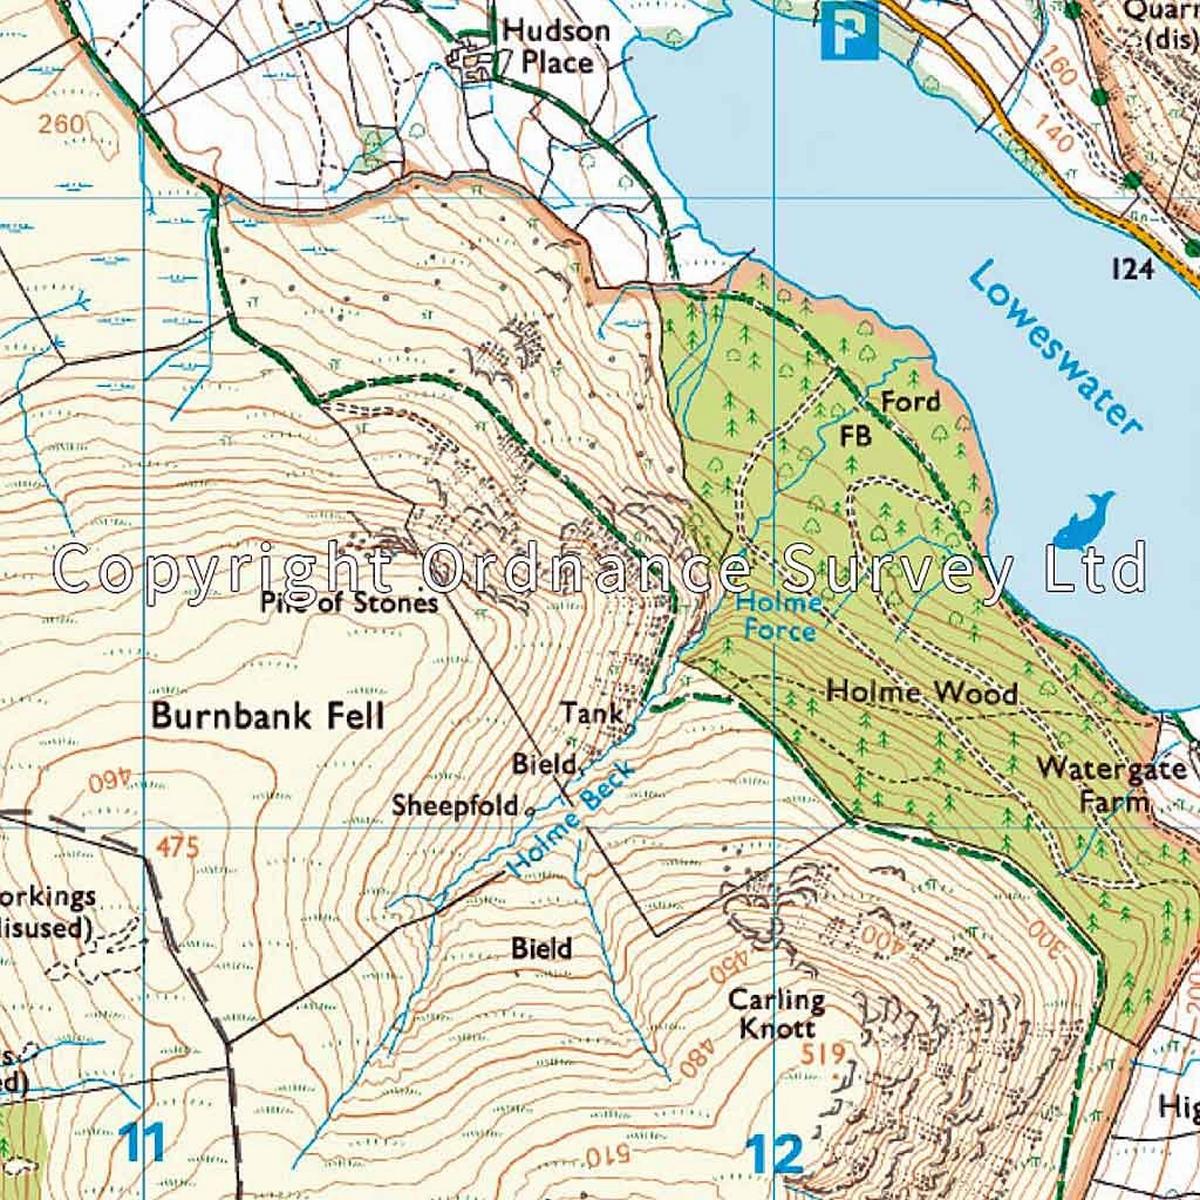 Ordnance Survey Explorer Active OL4 The English Lakes Map - NW Area